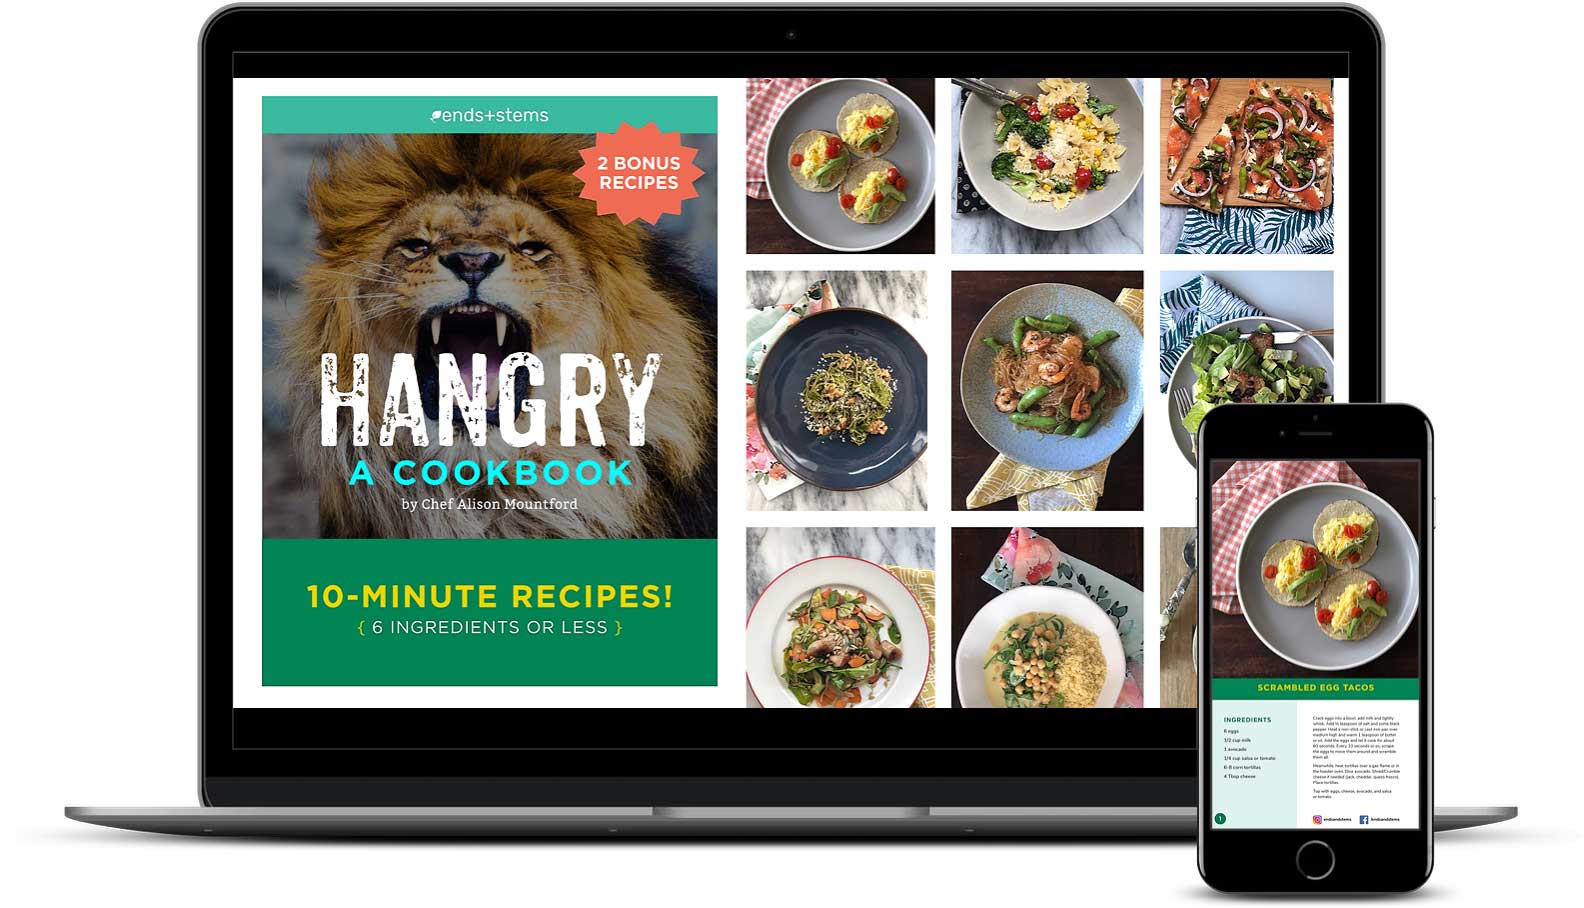 Hangry Cookbook - 2 Bonus Recipes included for Hangry Week